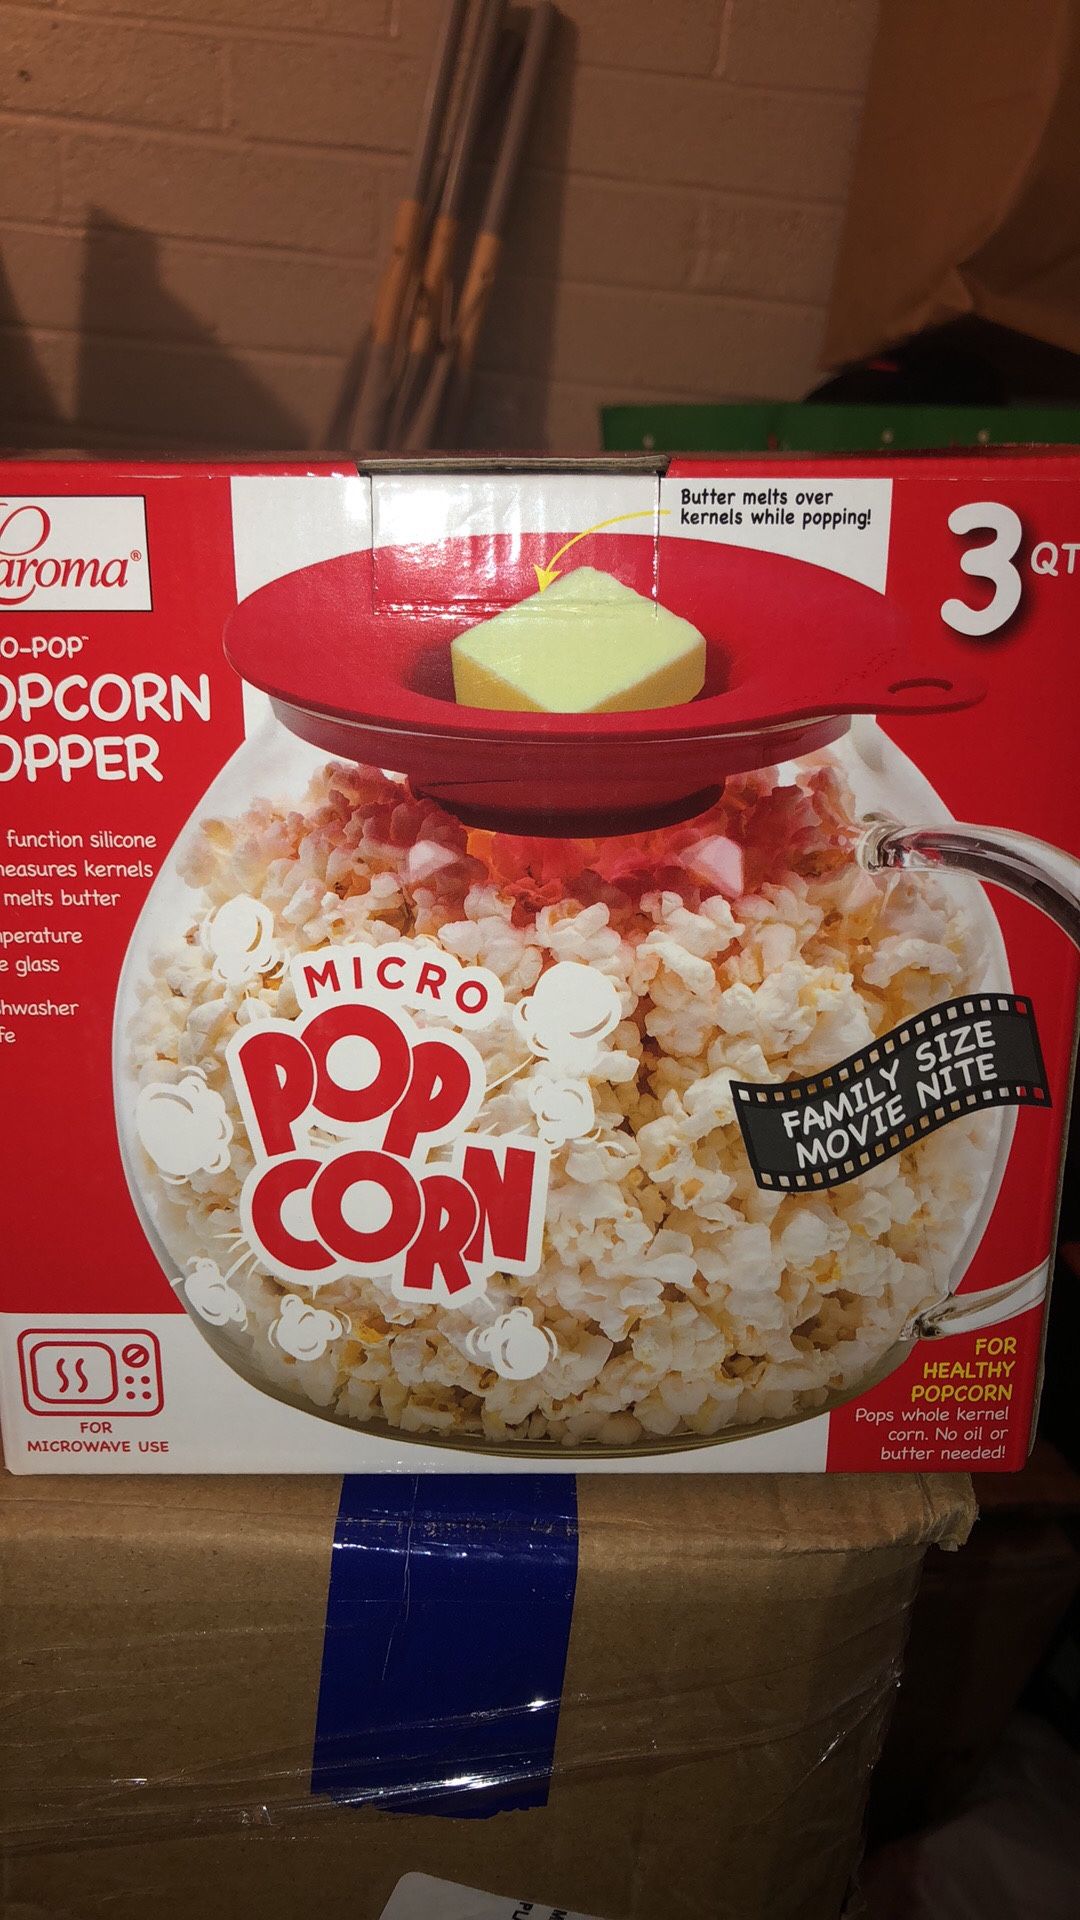 Laroma 3qt microwavable popcorn popcorn popper